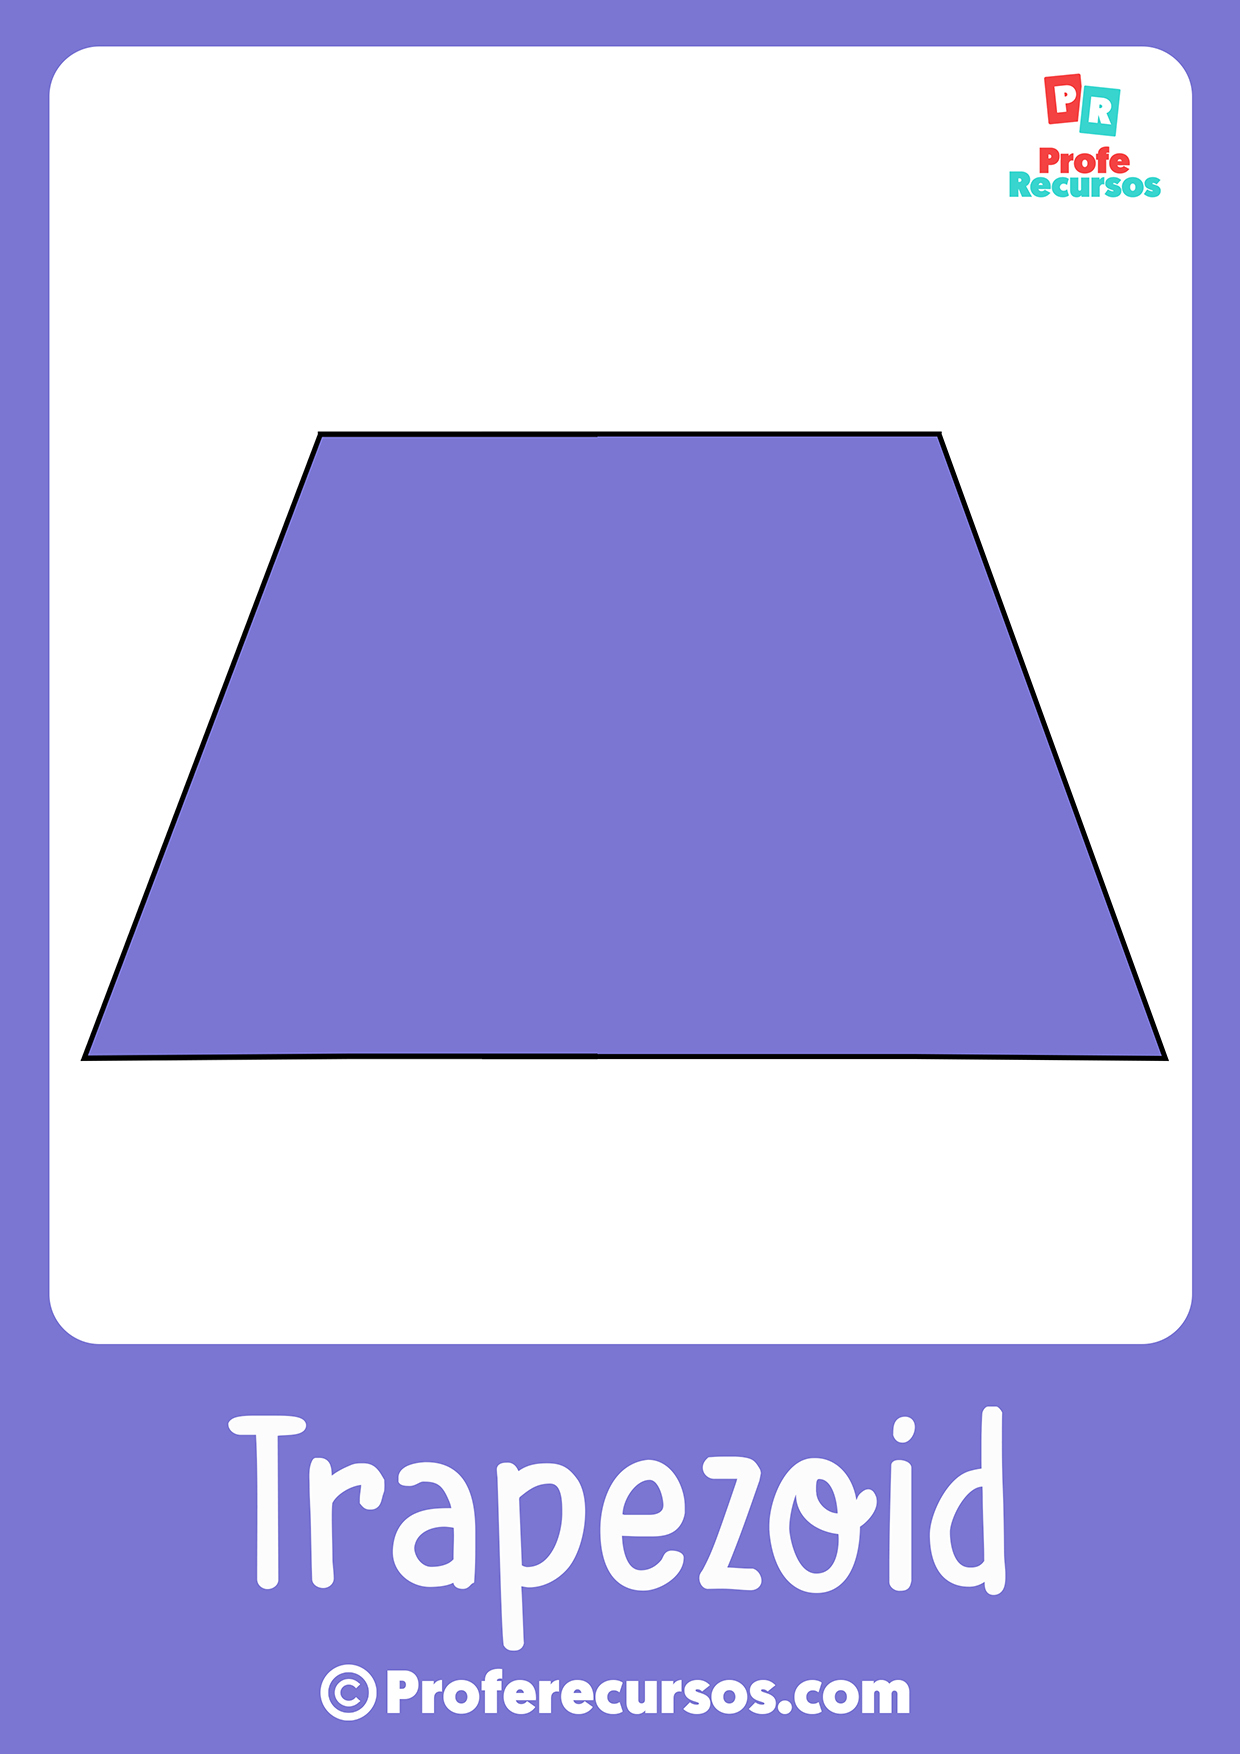 Trapezoid shape